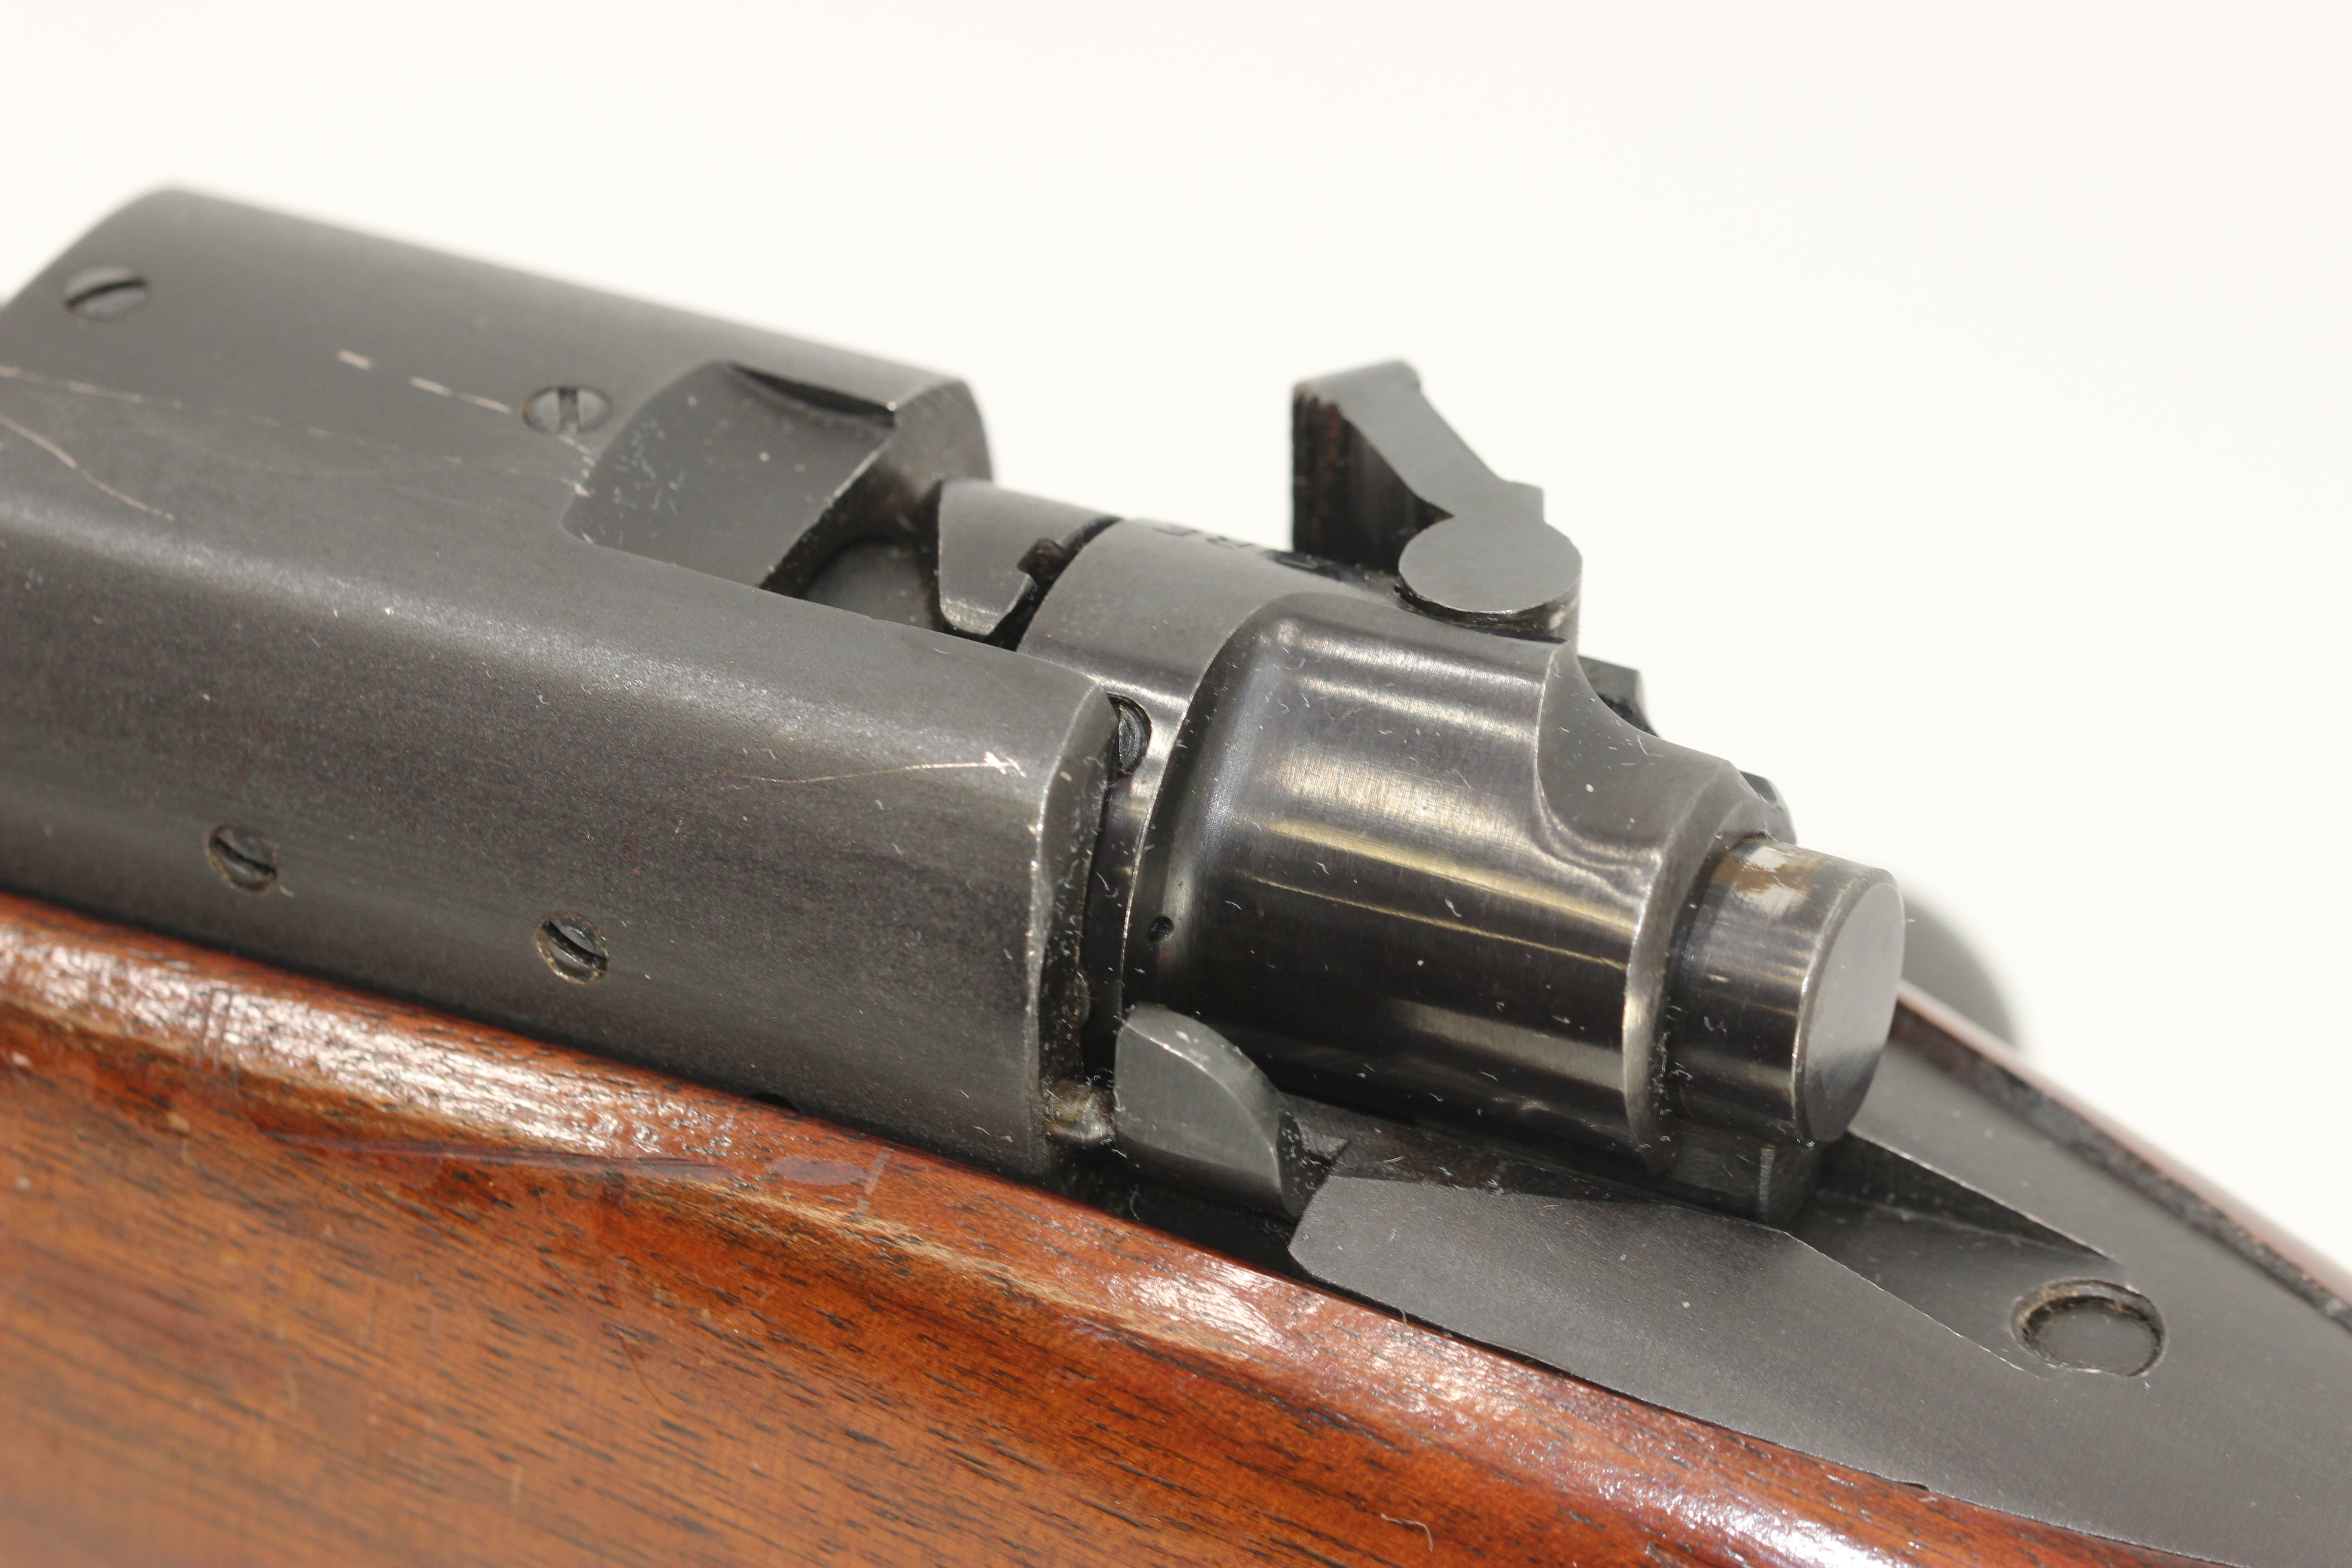 .30-06 Springfield Standard Rifle - 1957